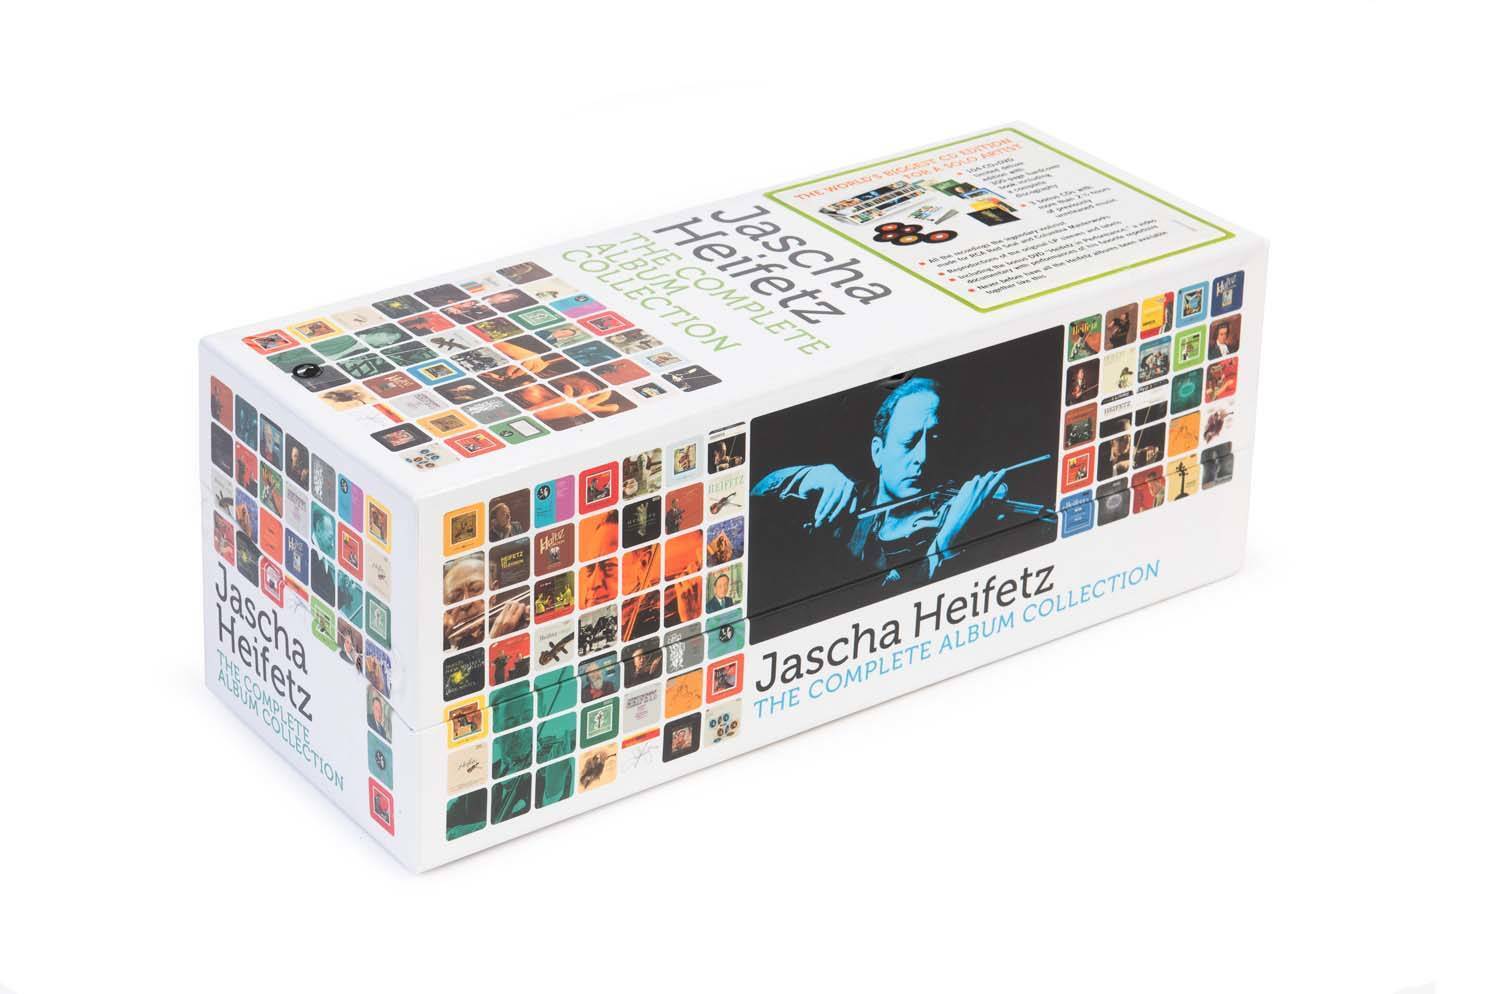 Jascha Heifetz: The Complete Album Collection in a presentation 